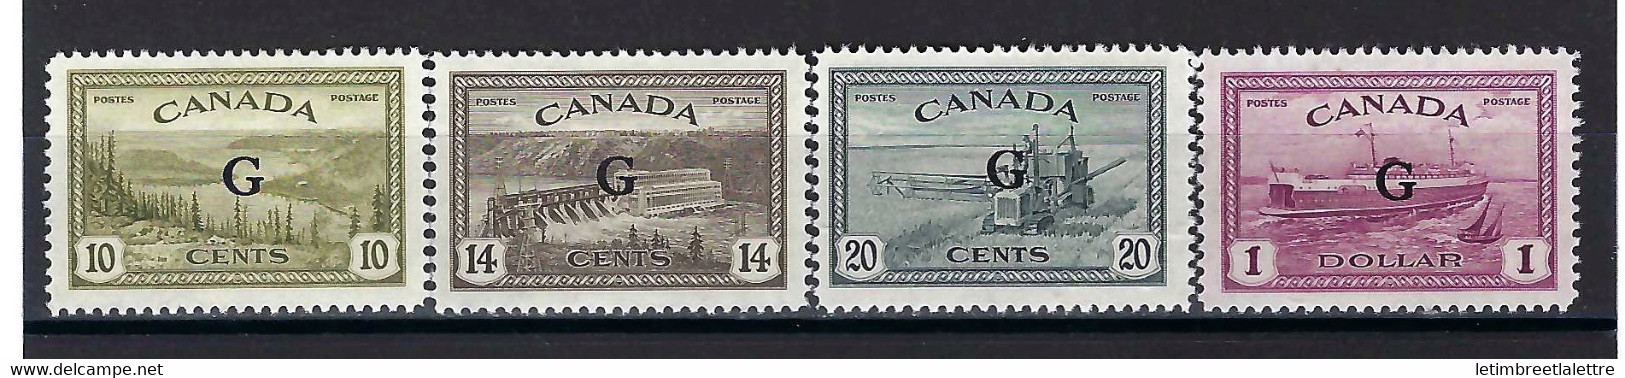 ⭐ Canada - Service - YT N° 16 à 19 * - Neuf Avec Charnière - 1950 / 1952 ⭐ - Aufdrucksausgaben